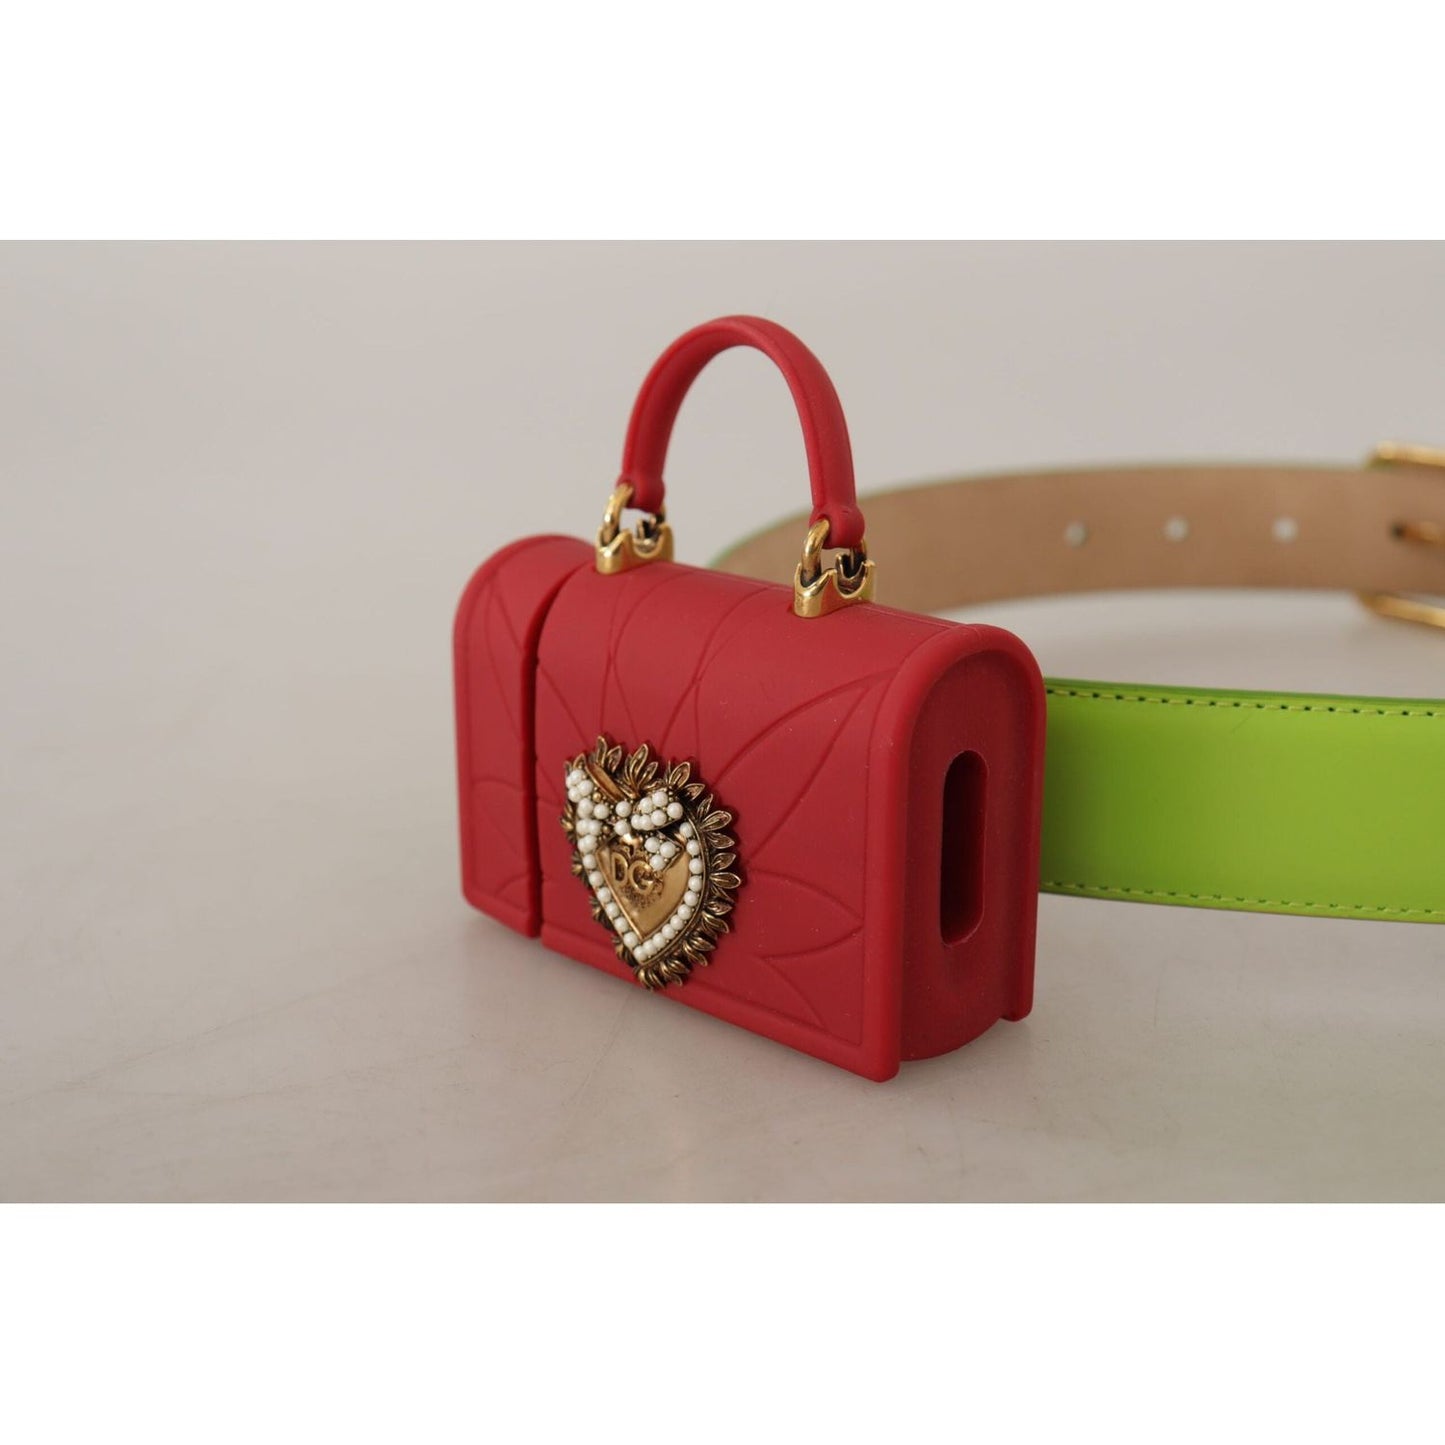 Dolce & Gabbana Elegant Leather Belt with Mini Bag Accessory green-leather-devotion-heart-micro-bag-headphones-belt IMG_9070-scaled-c72f977f-344.jpg